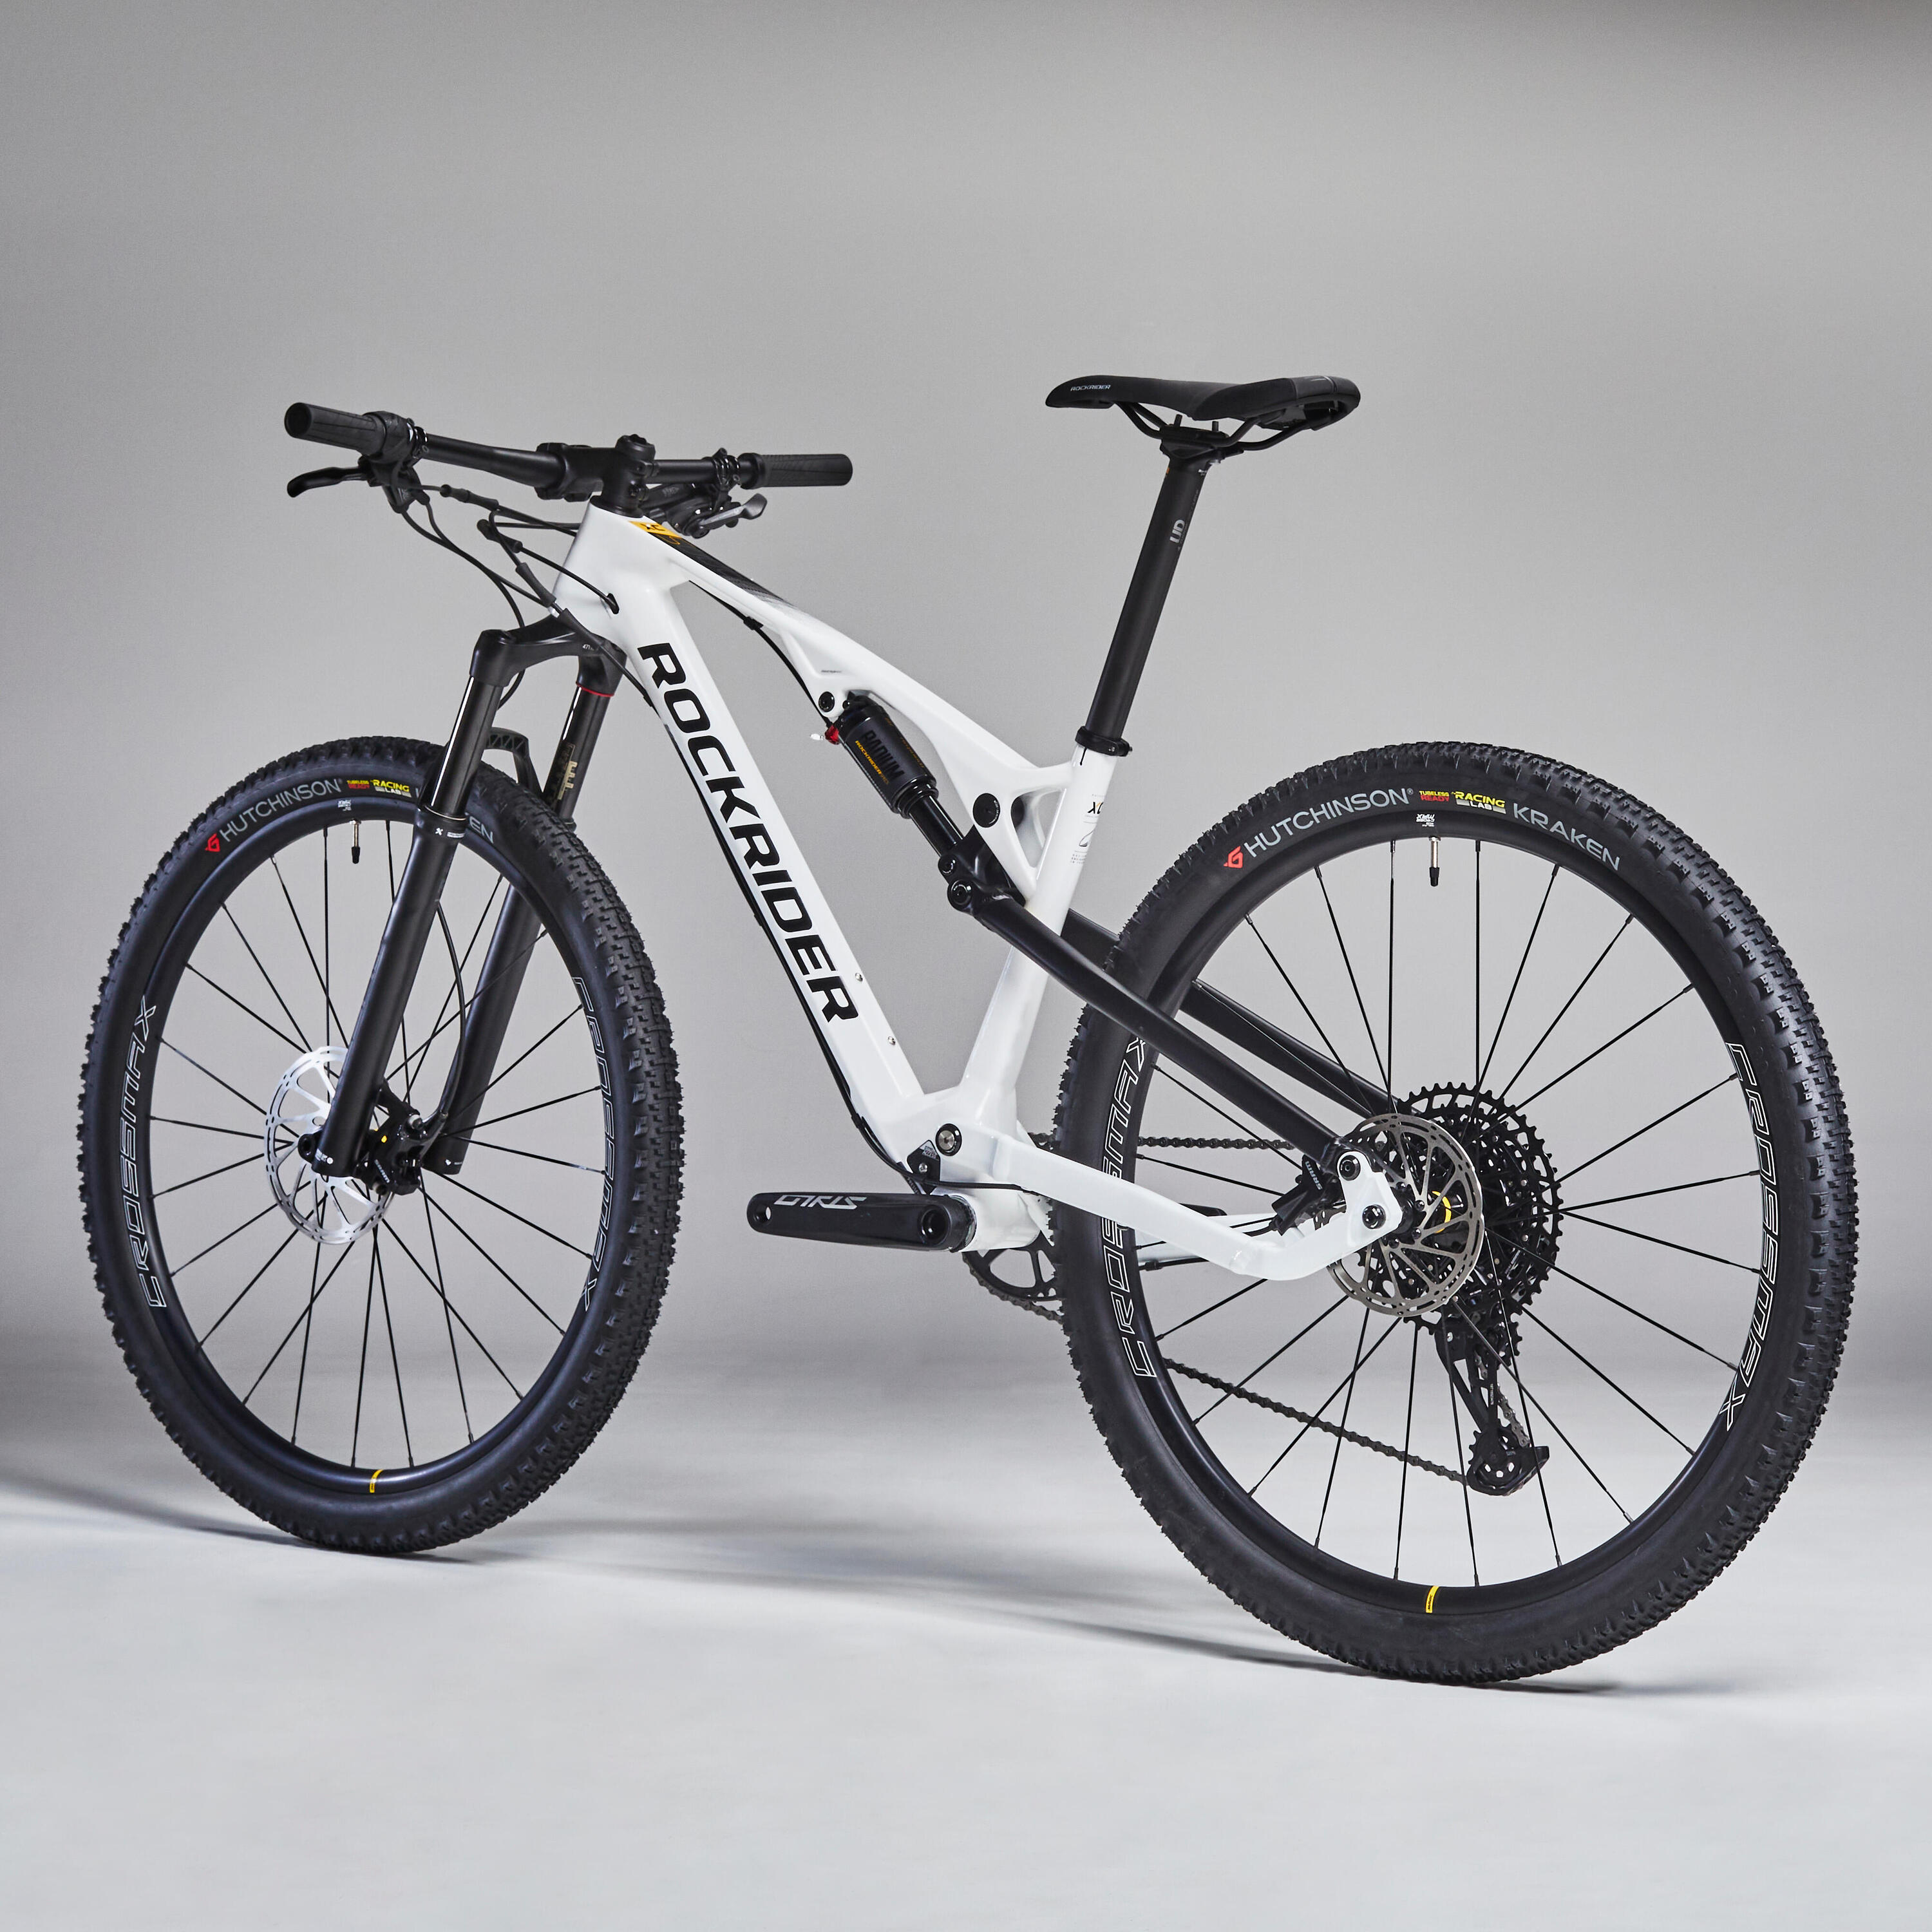 29 inch Full Suspension Carbon Mountain Bike rockrider XC 900 - white 3/13